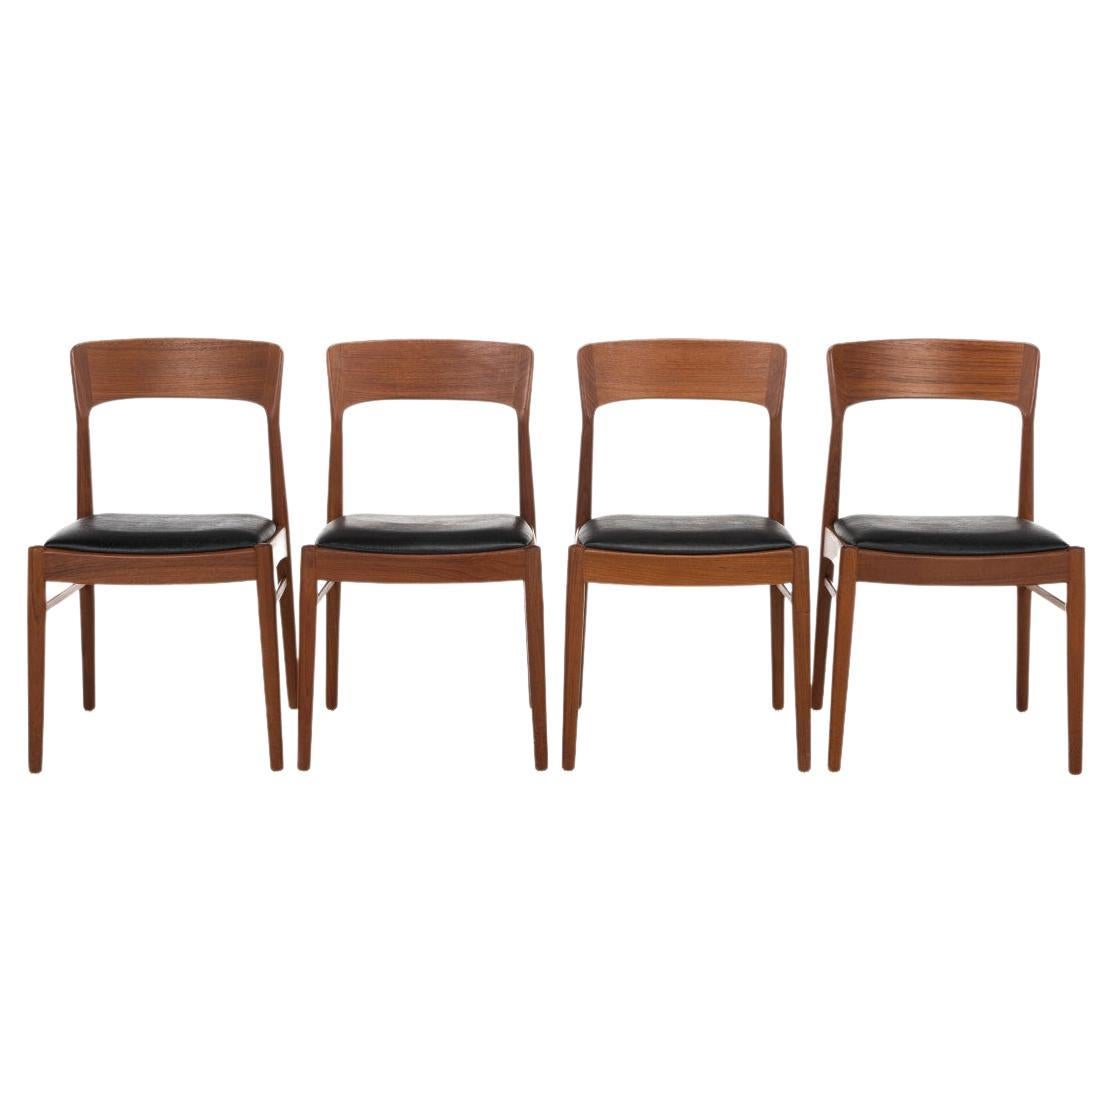 Set of 4 Dining Chairs by Henning Kjaernulf for Ks Mobler, Denmark, 1960s